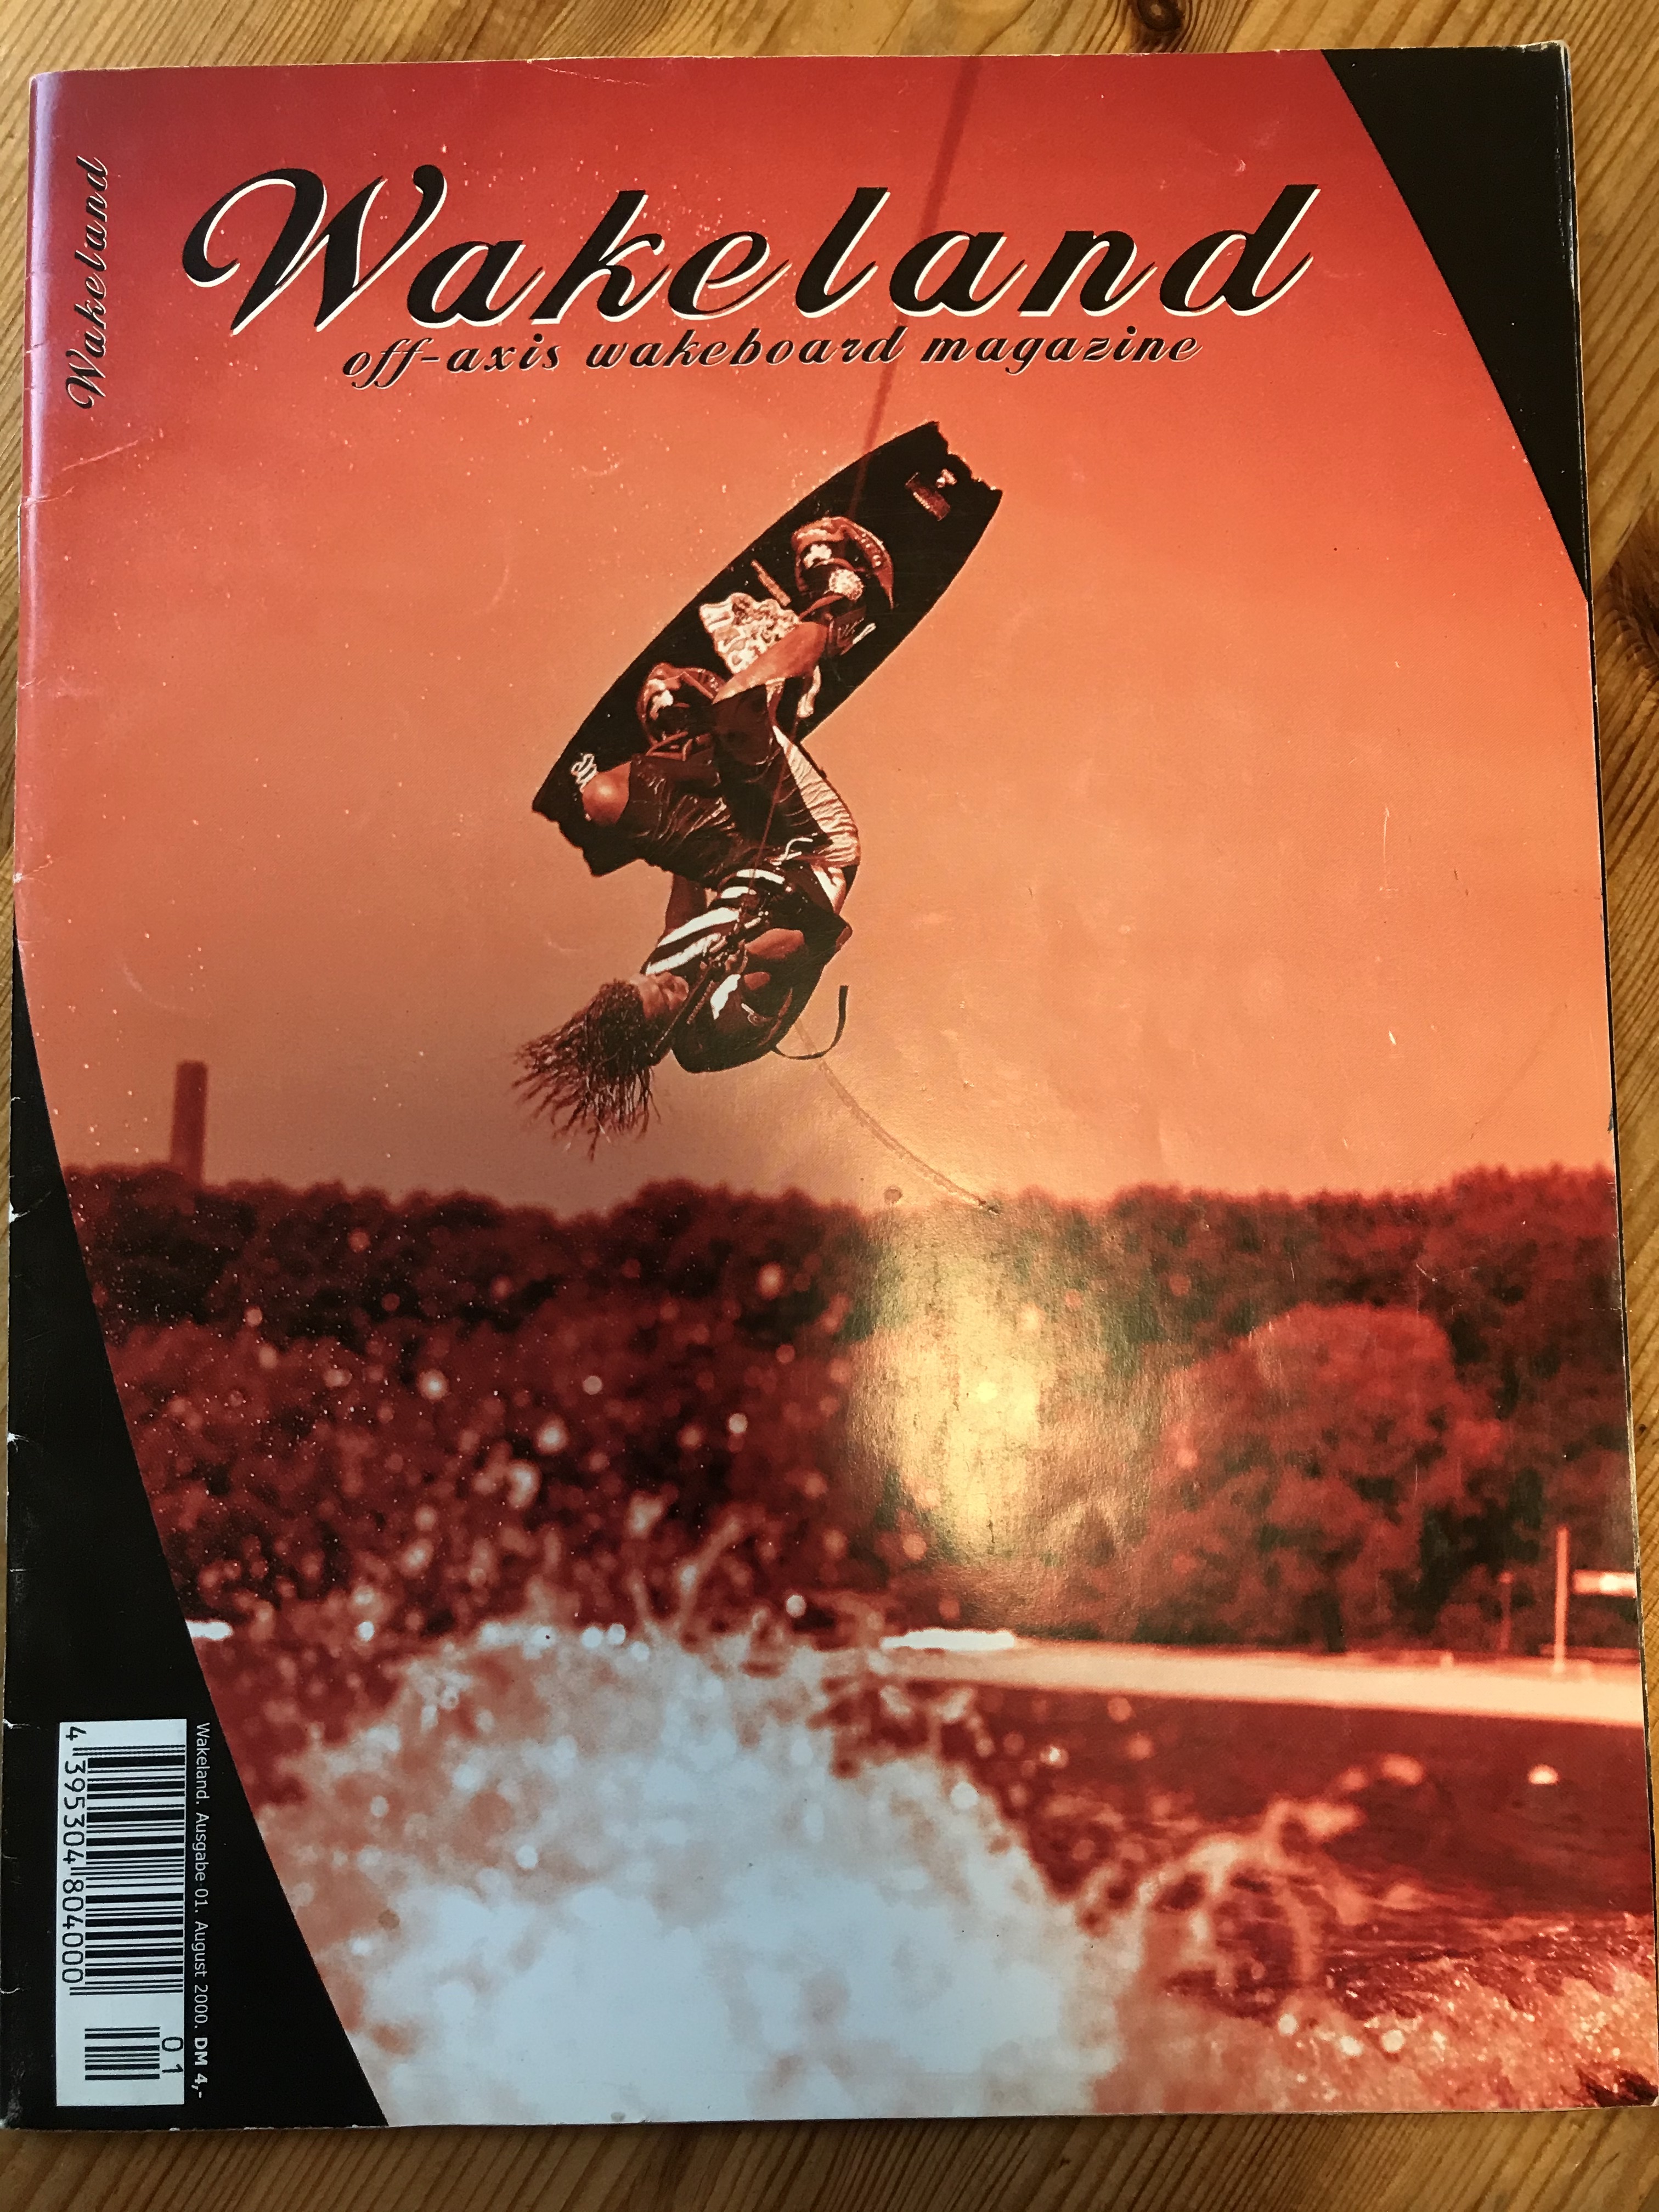 Wakeland - Wakeboardmagazin